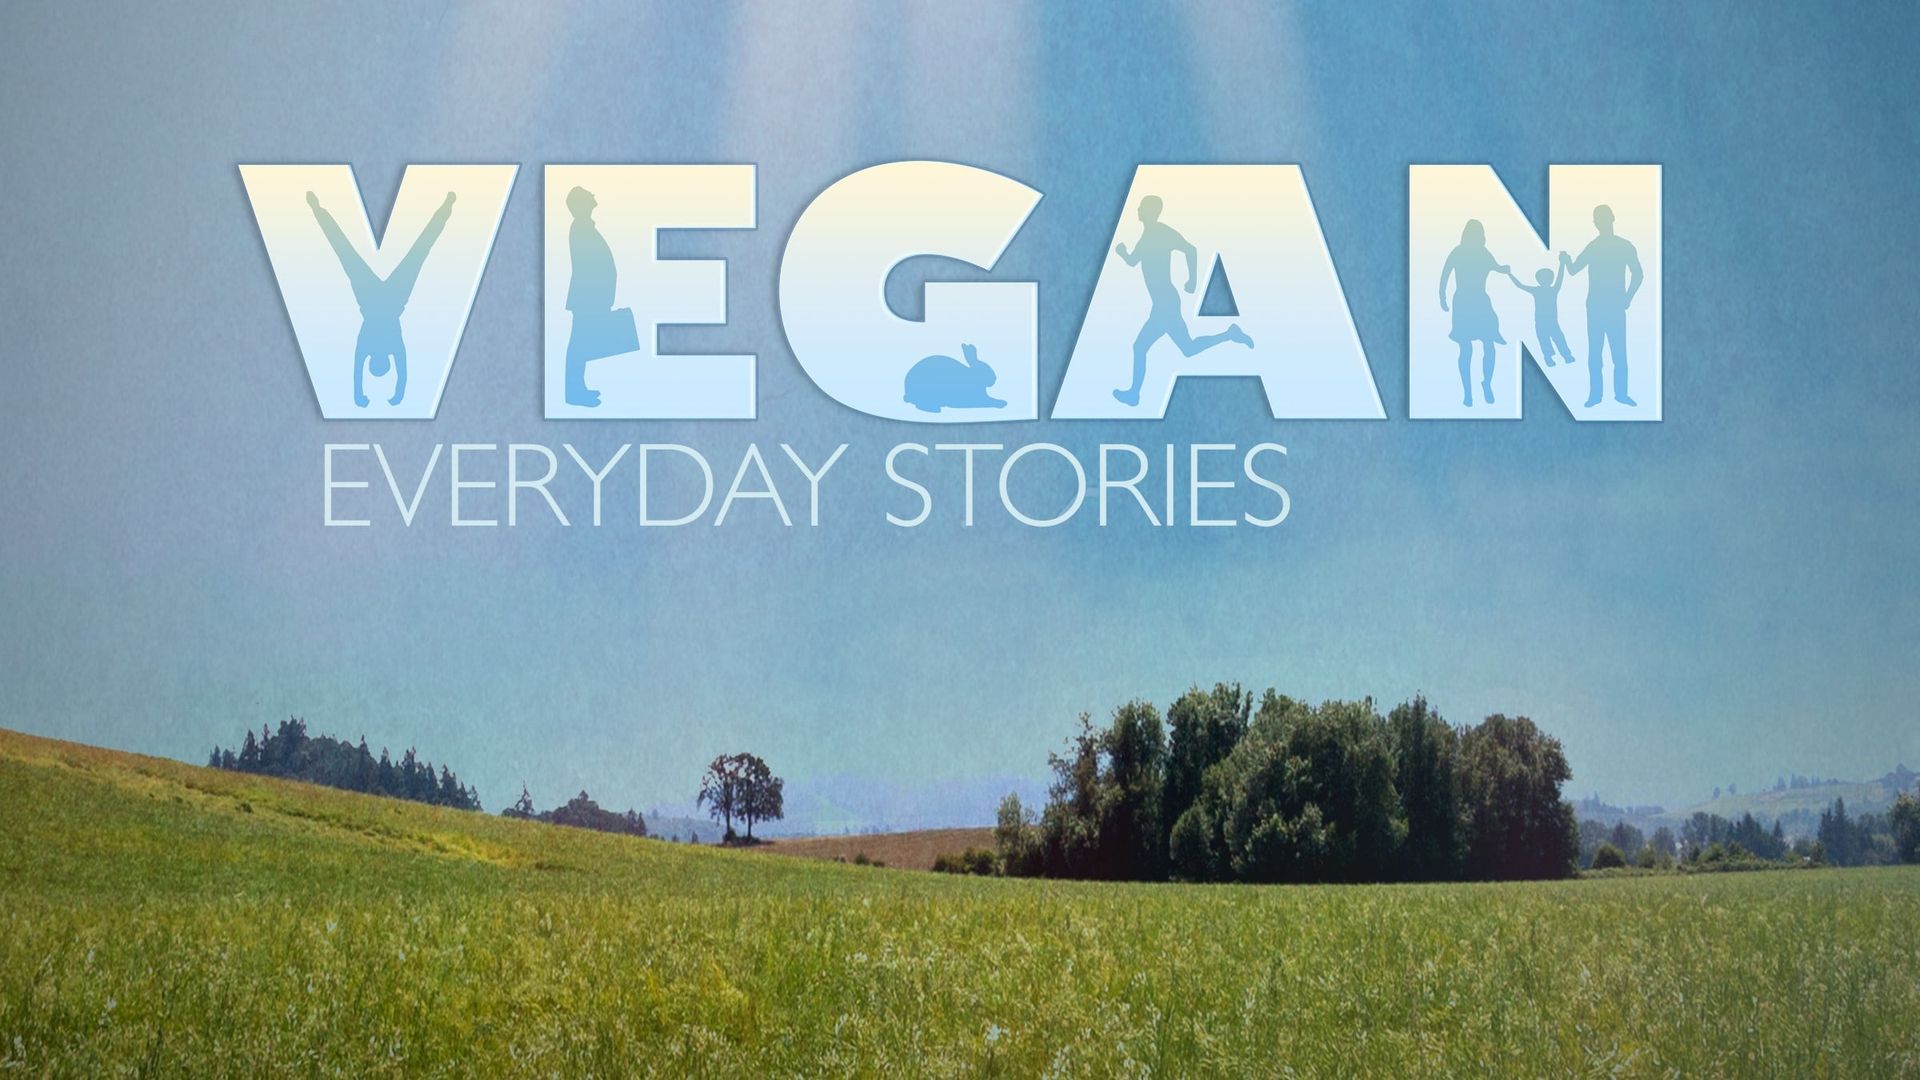 Vegan: Everyday Stories background